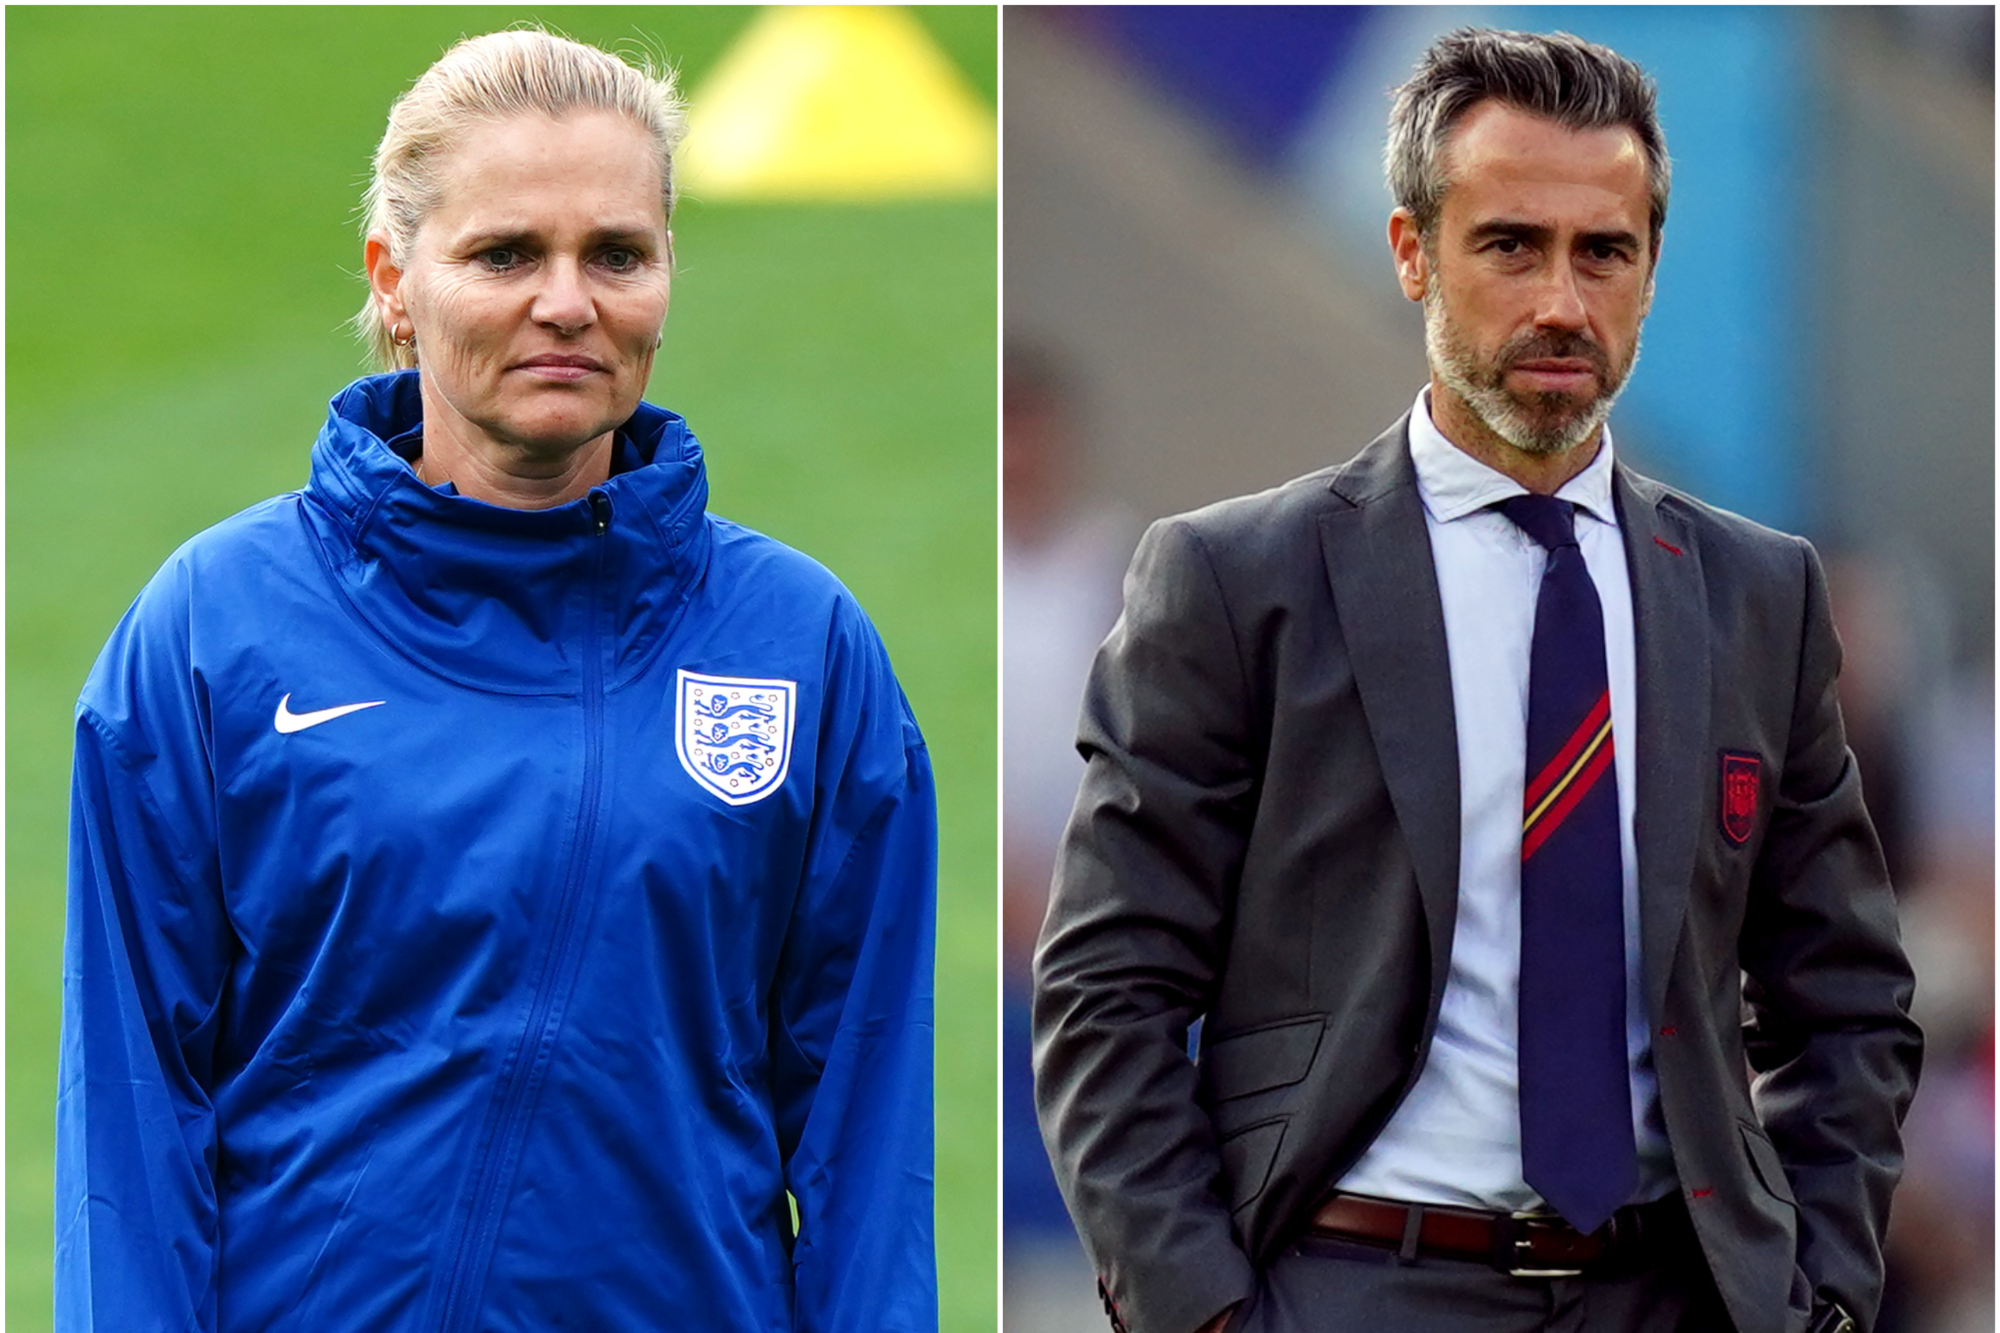 Sarina Wiegman and Jorge Vilda will be hoping for Women’s World Cup glory on Sunday (Zac Goodwin/Gareth Fuller/PA)